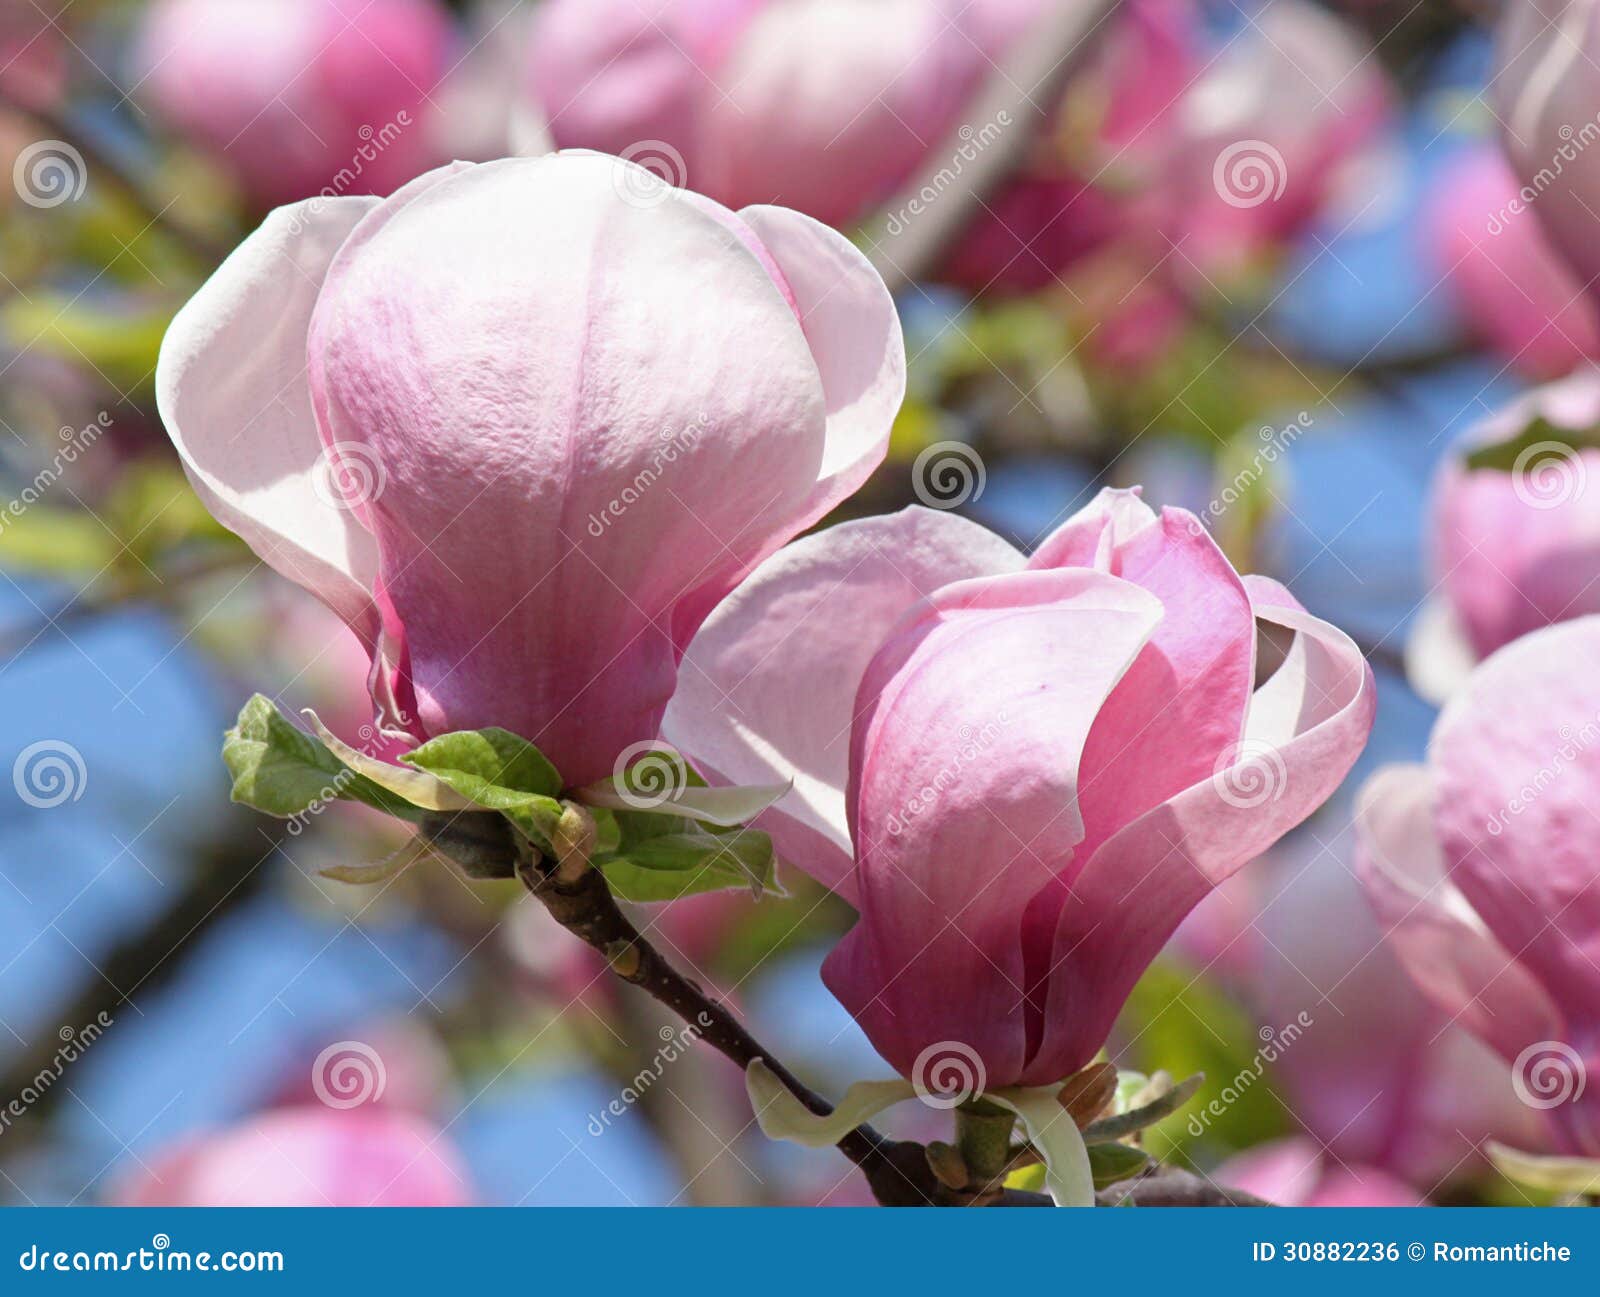 Magnolia tree stock photo. Image of macro, bloom, garden - 30882236